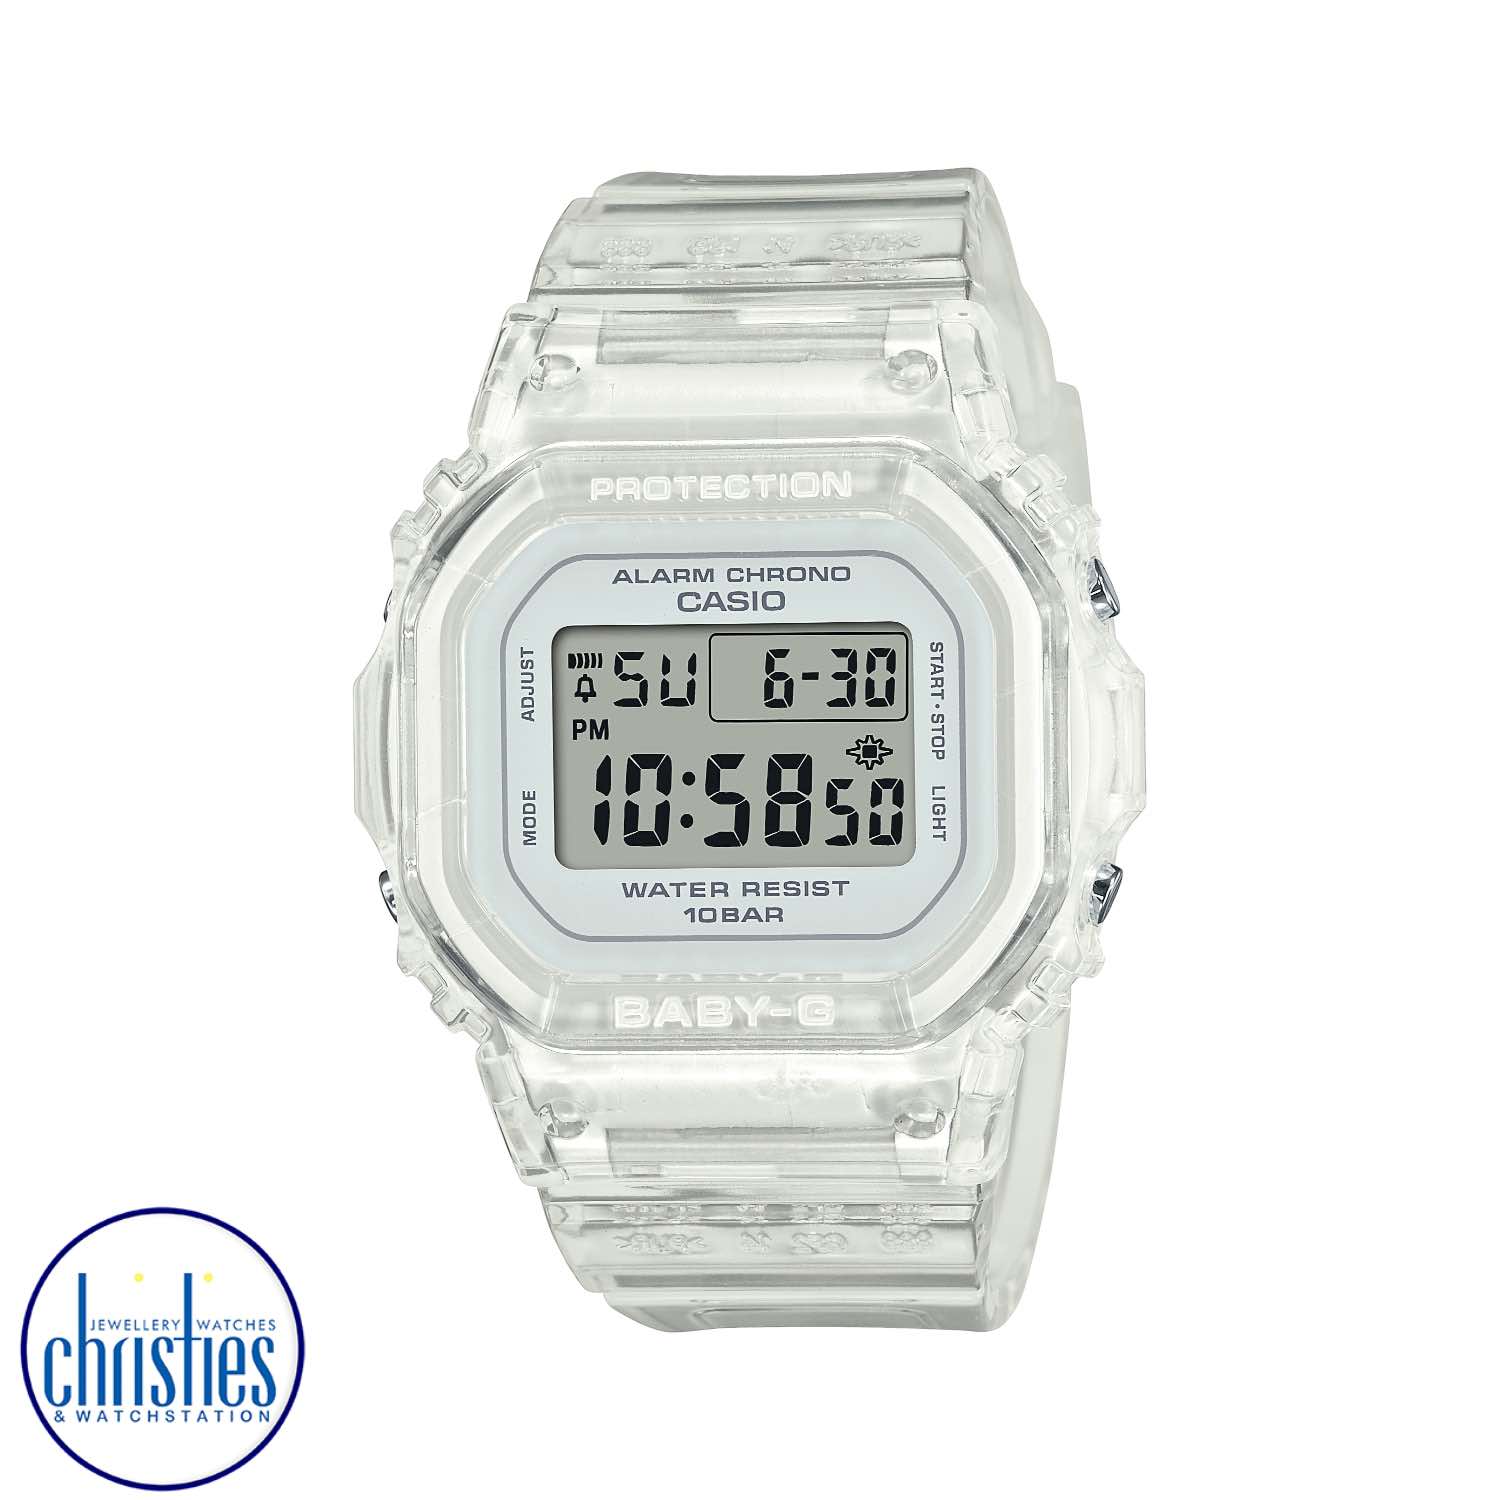 BGD565S-7 Casio Baby-G Square Watch buy baby-g watch nz